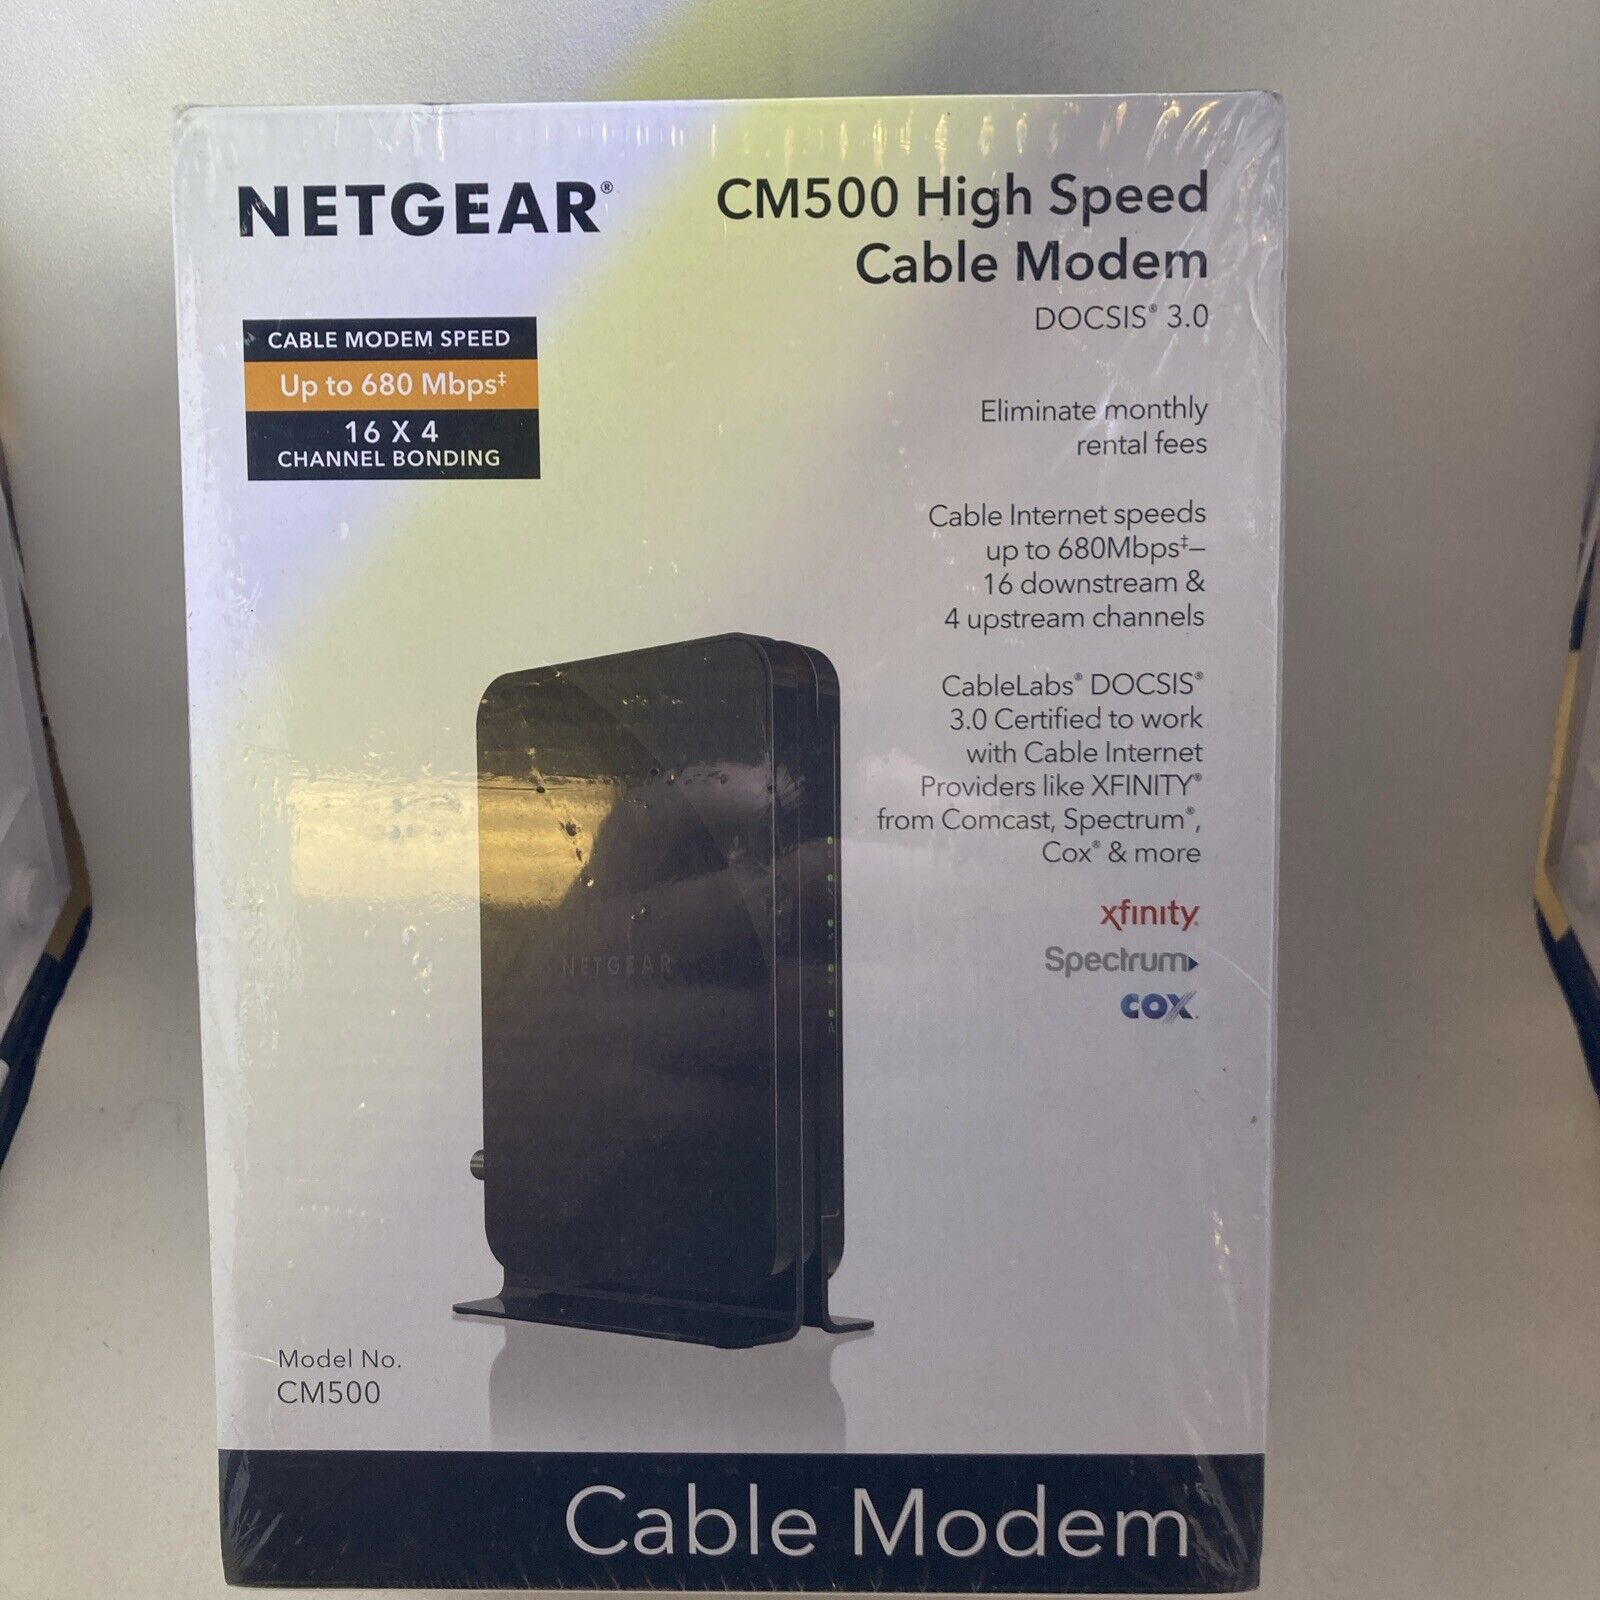 NETGEAR Cm500 16x4 DOCSIS 3.0 Cable Modem Max Download Speeds of 686mbps (G)